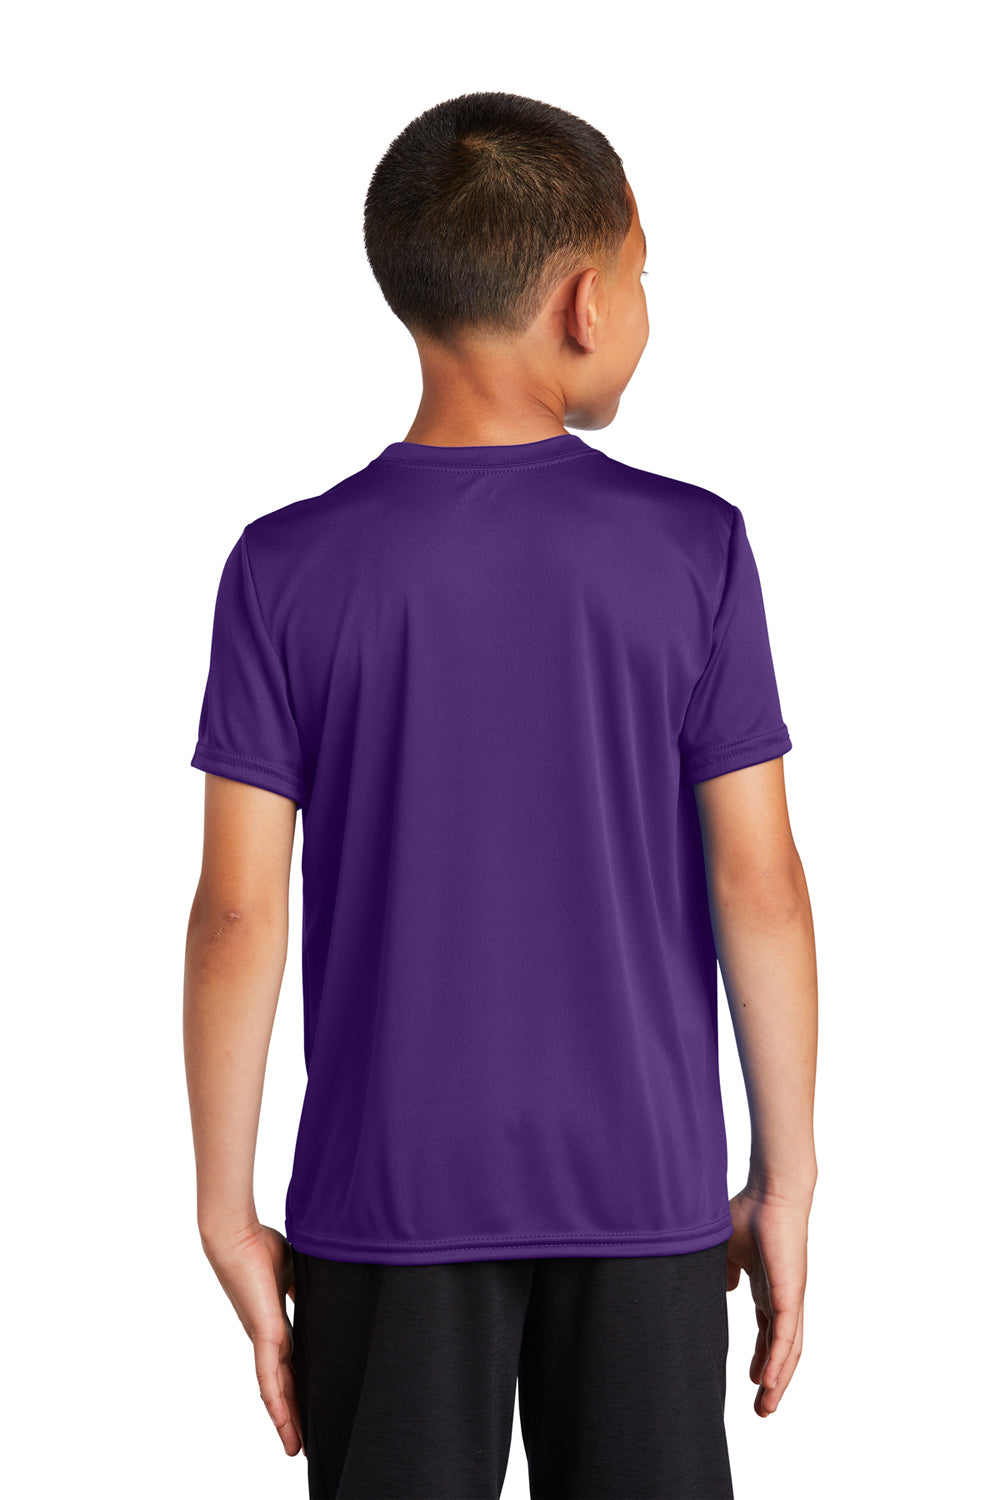 Port & Company PC380Y Youth Dry Zone Performance Moisture Wicking Short Sleeve Crewneck T-Shirt Team Purple Back